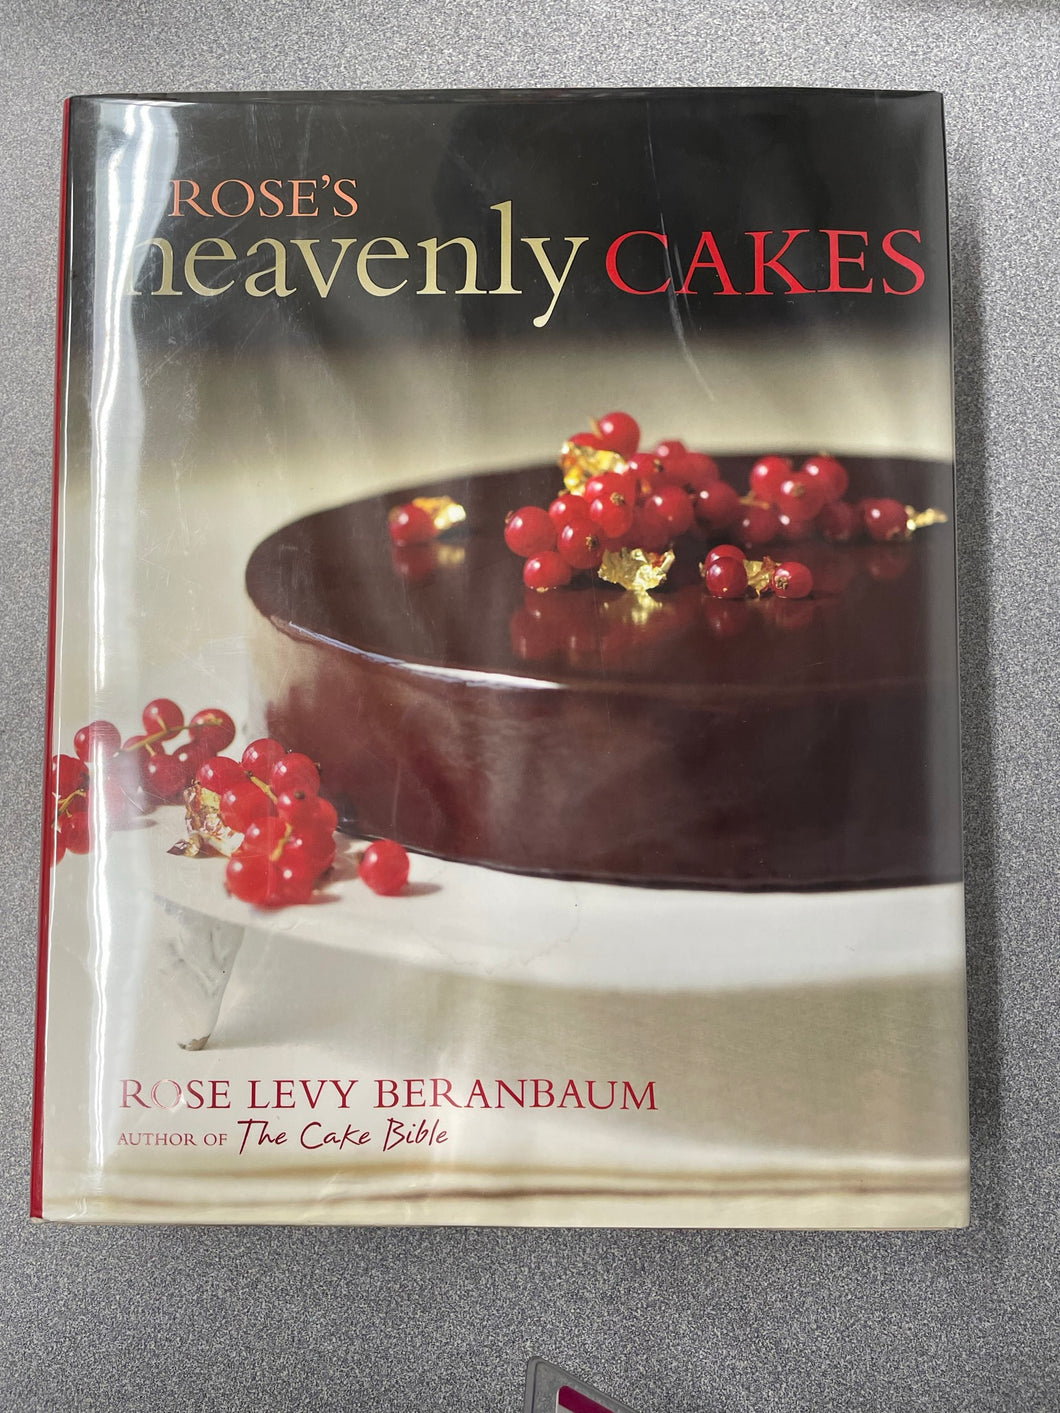 Rose's Heavenly Cakes, Beranbaum, Rose Levy [2009] CO 9/23